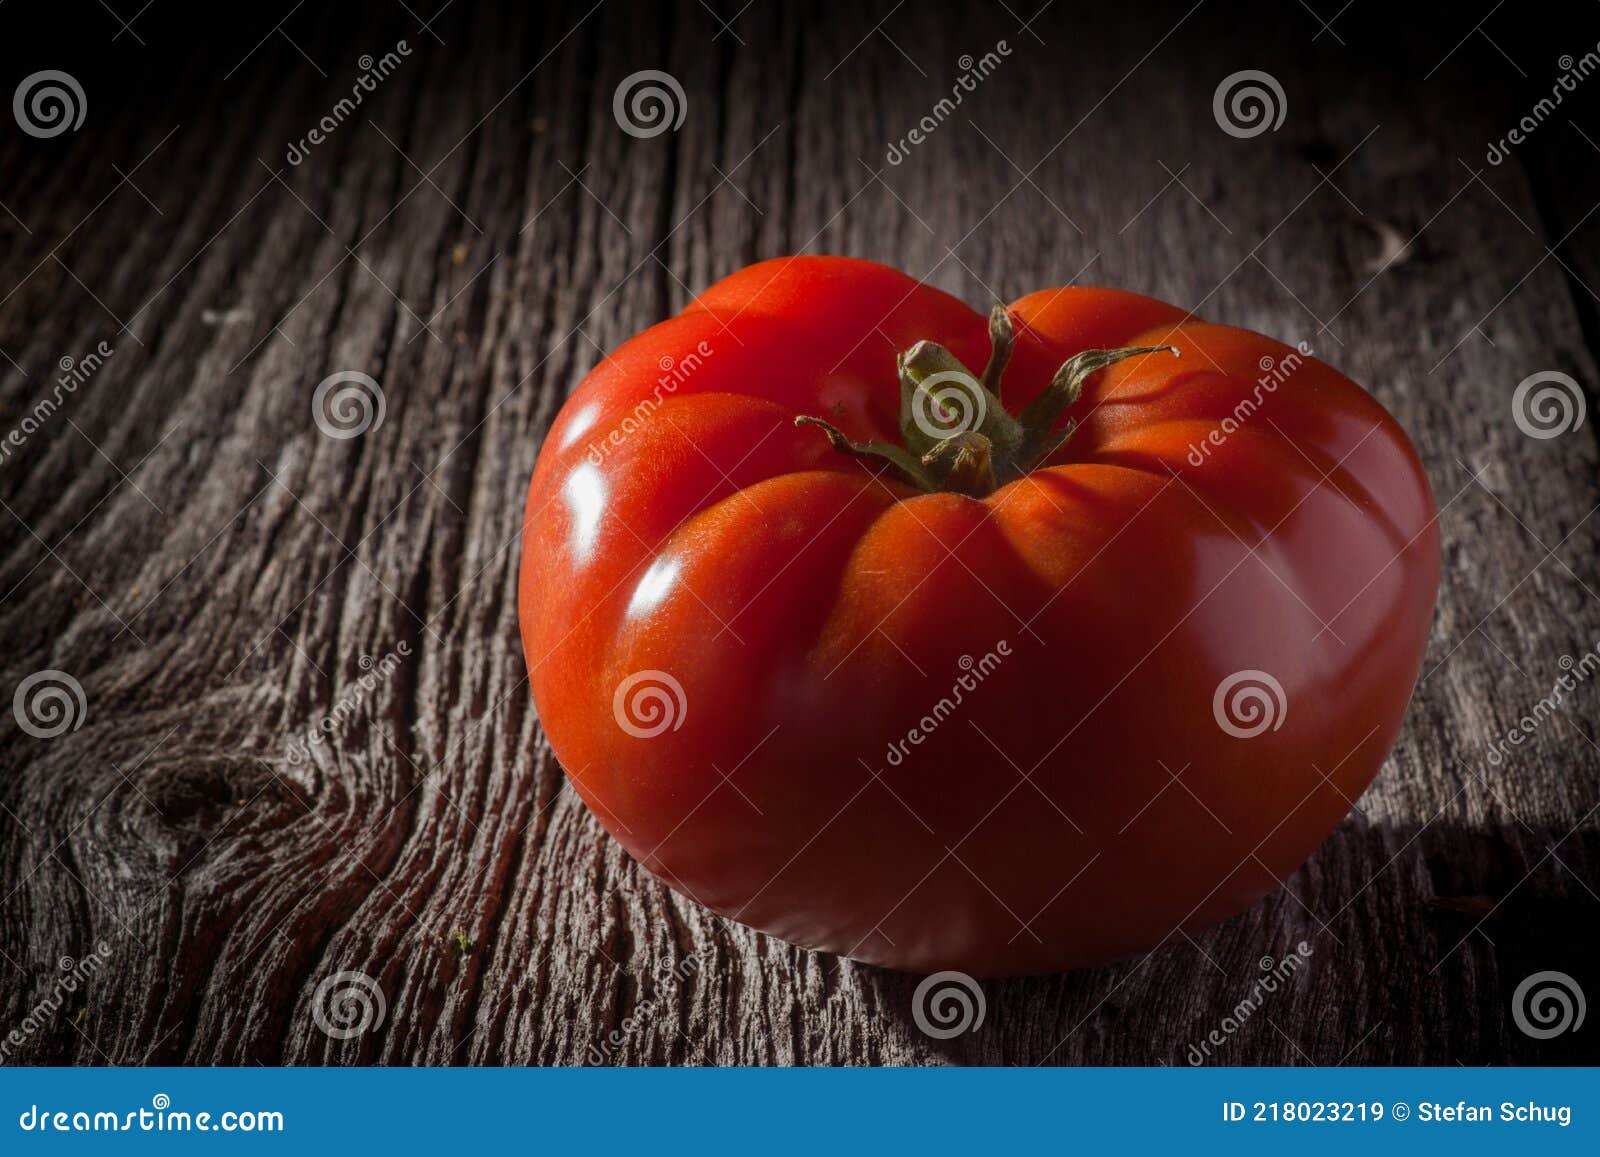 humongous tomato